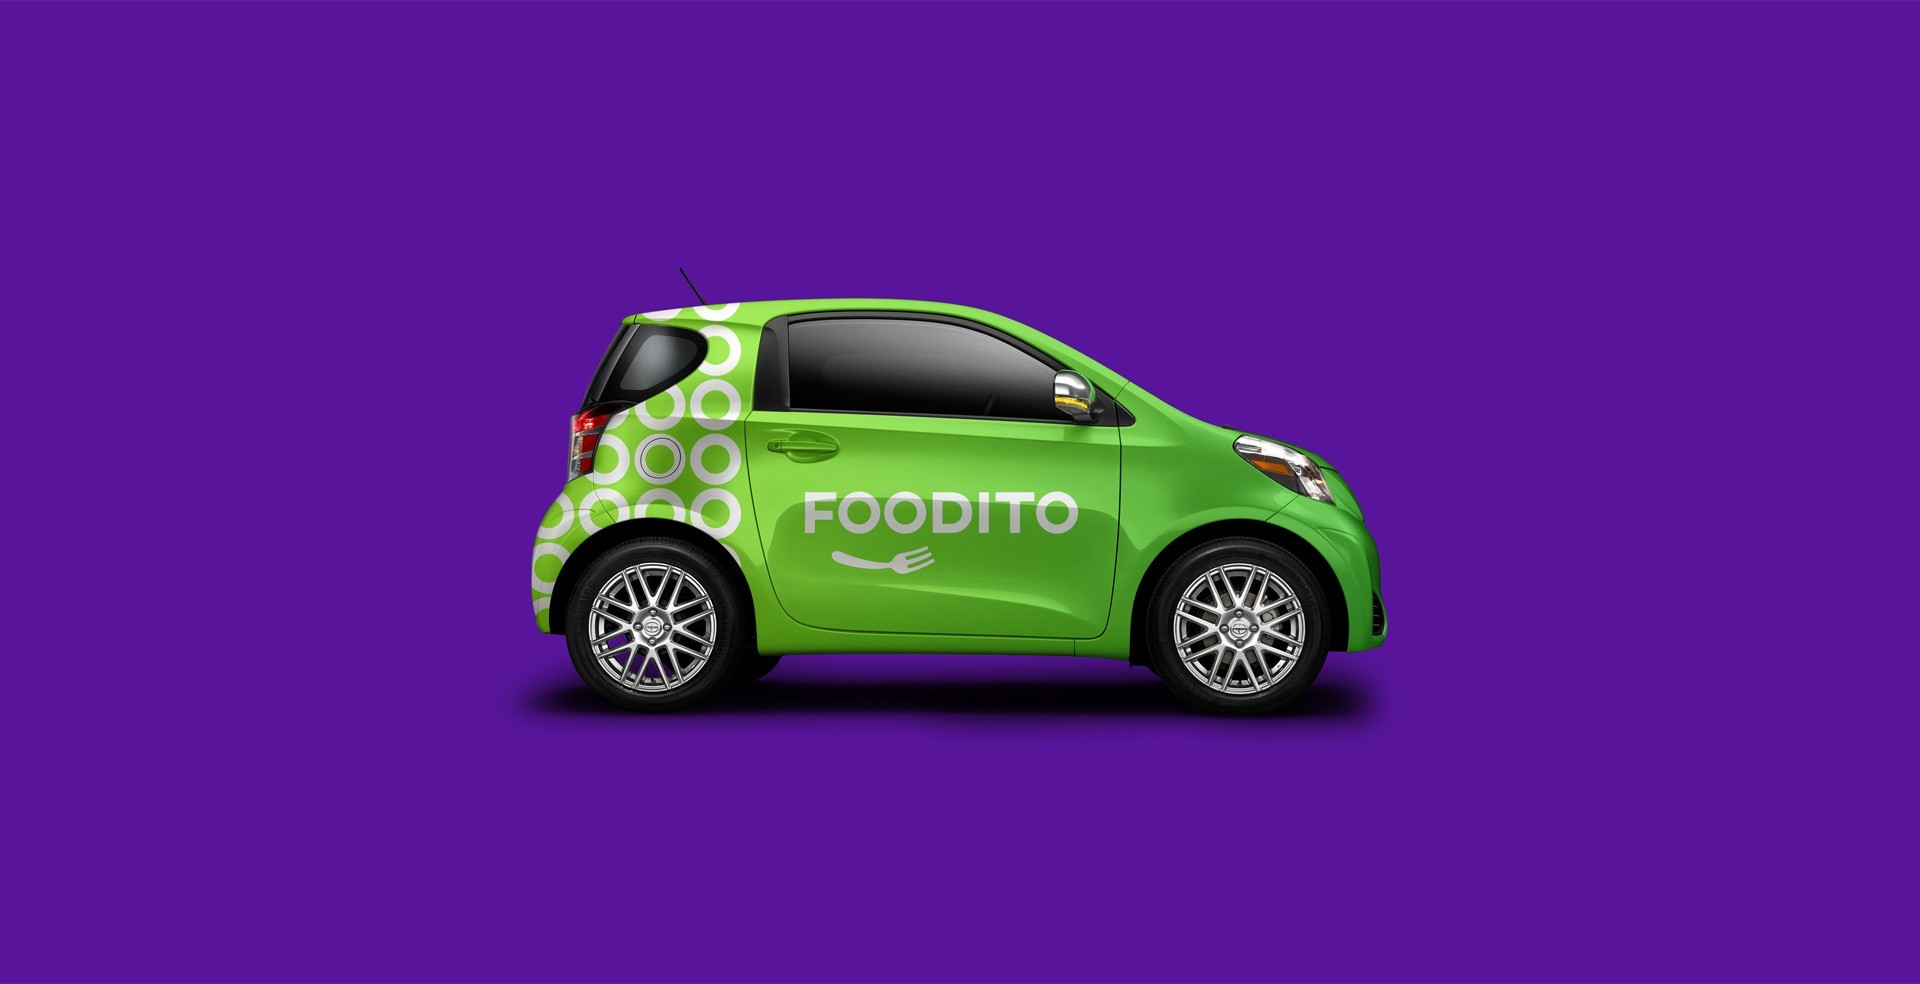 Foodito branded car